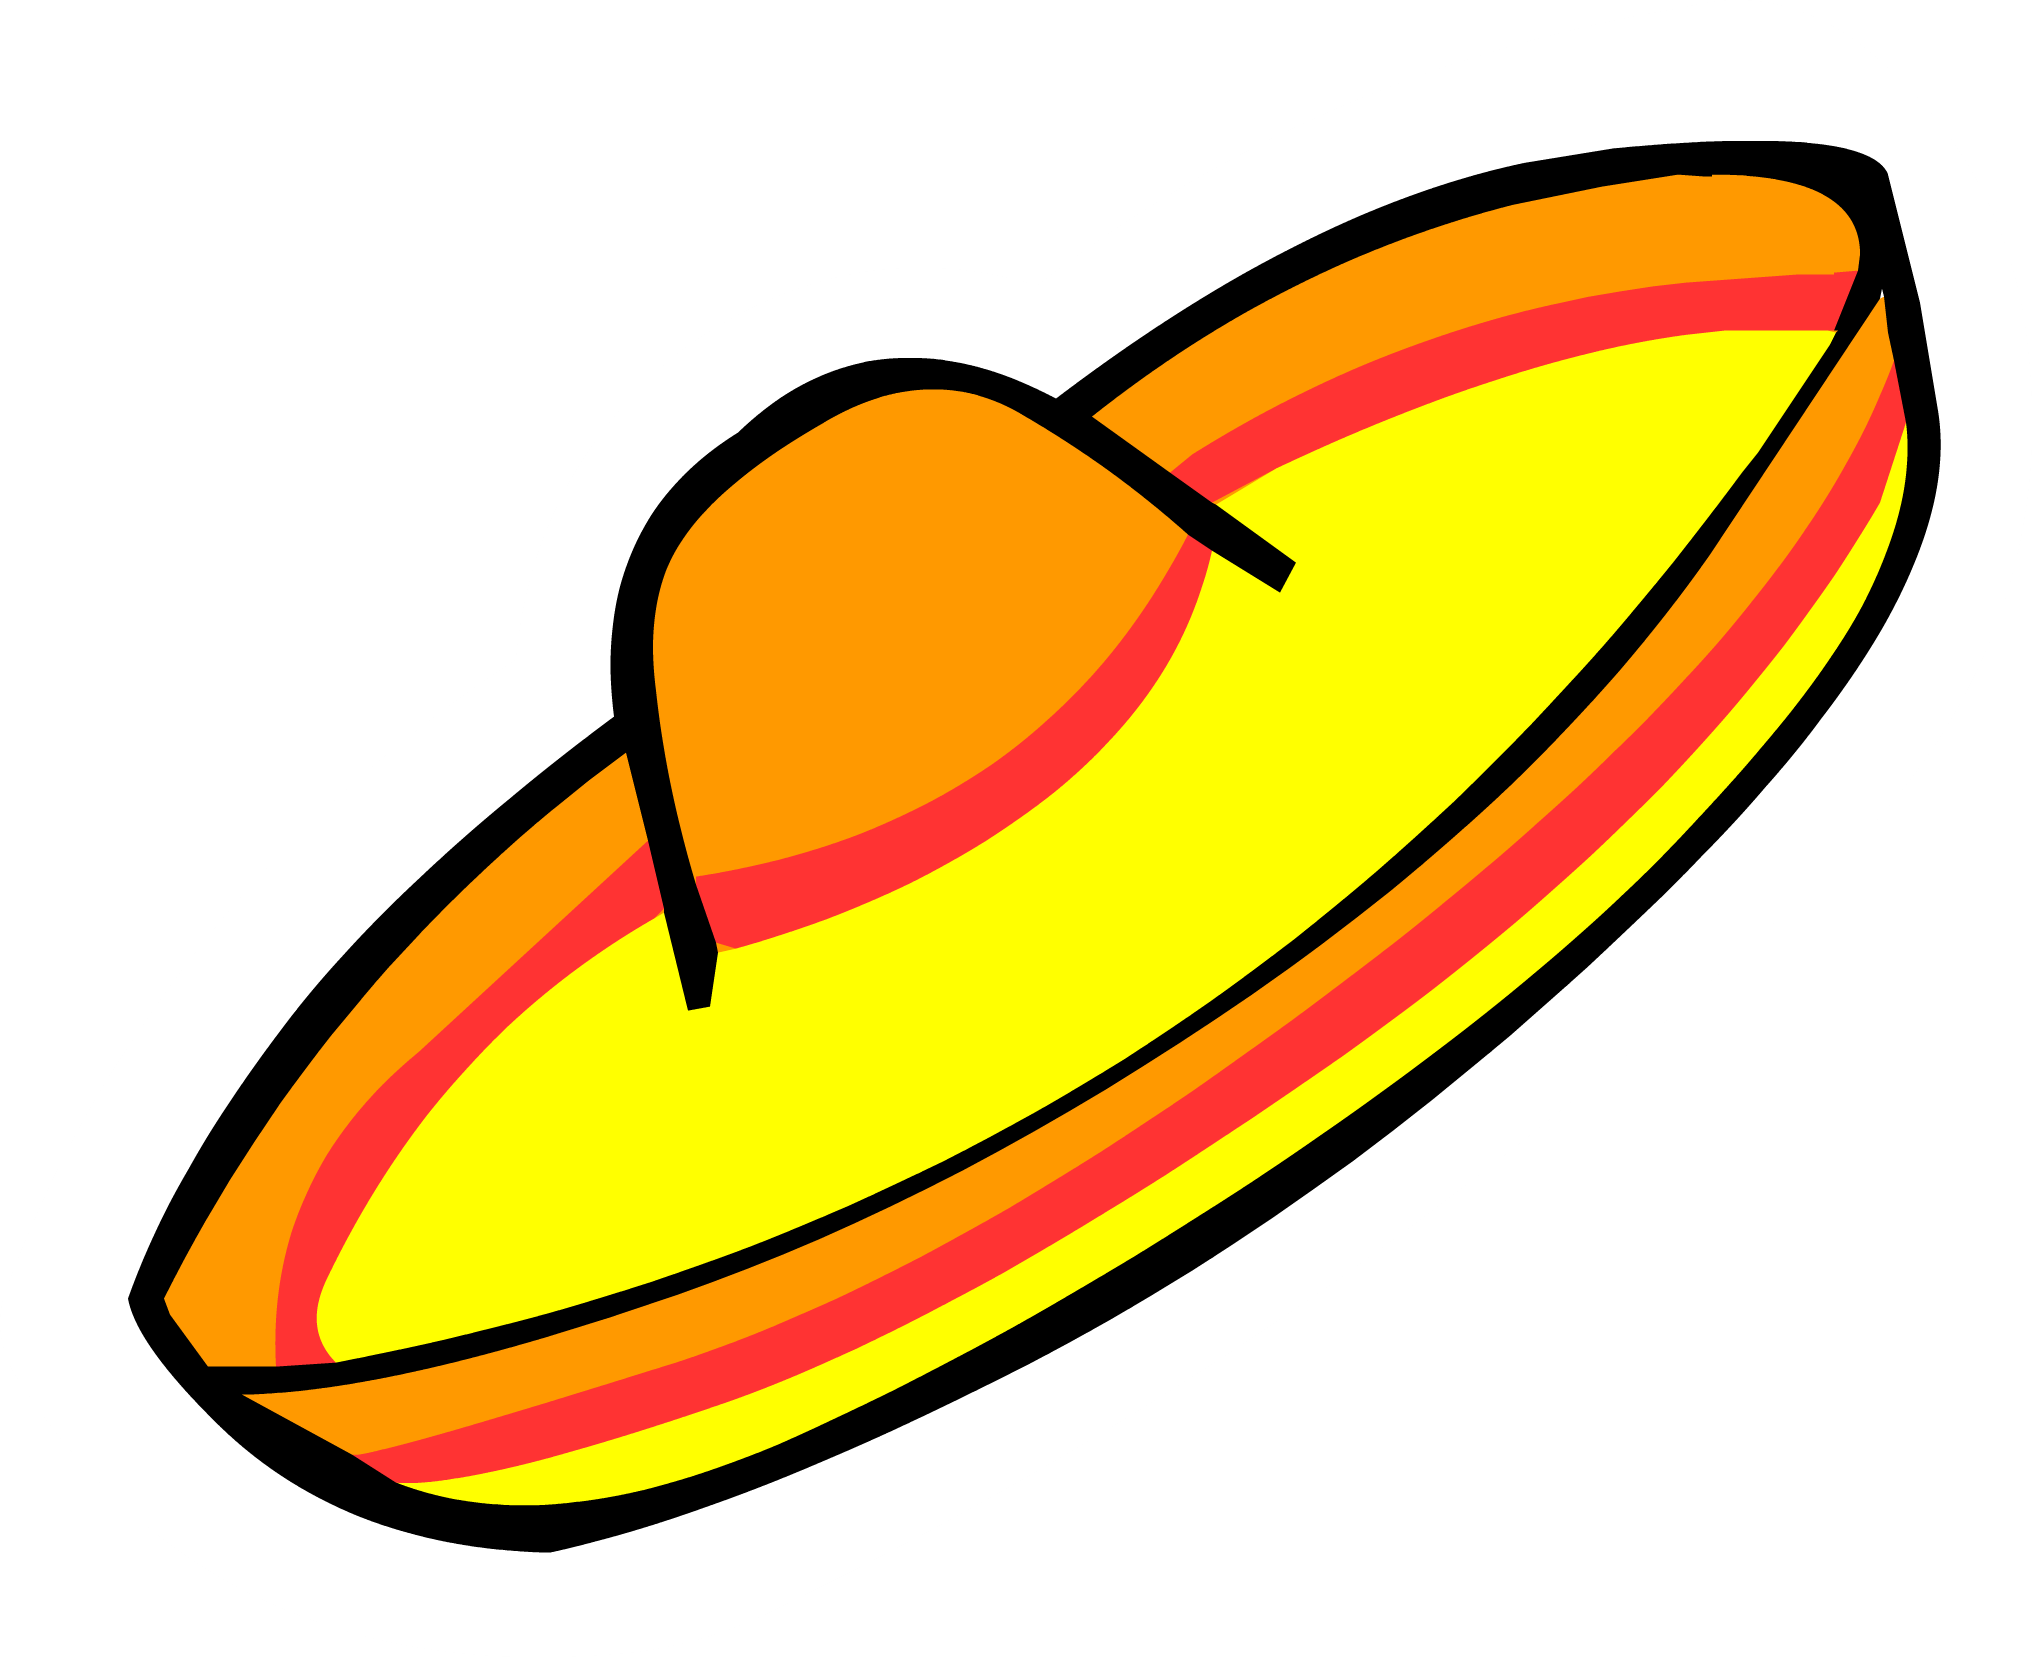 Sombrero Pin | Club Penguin Wiki | Fandom powered by Wikia